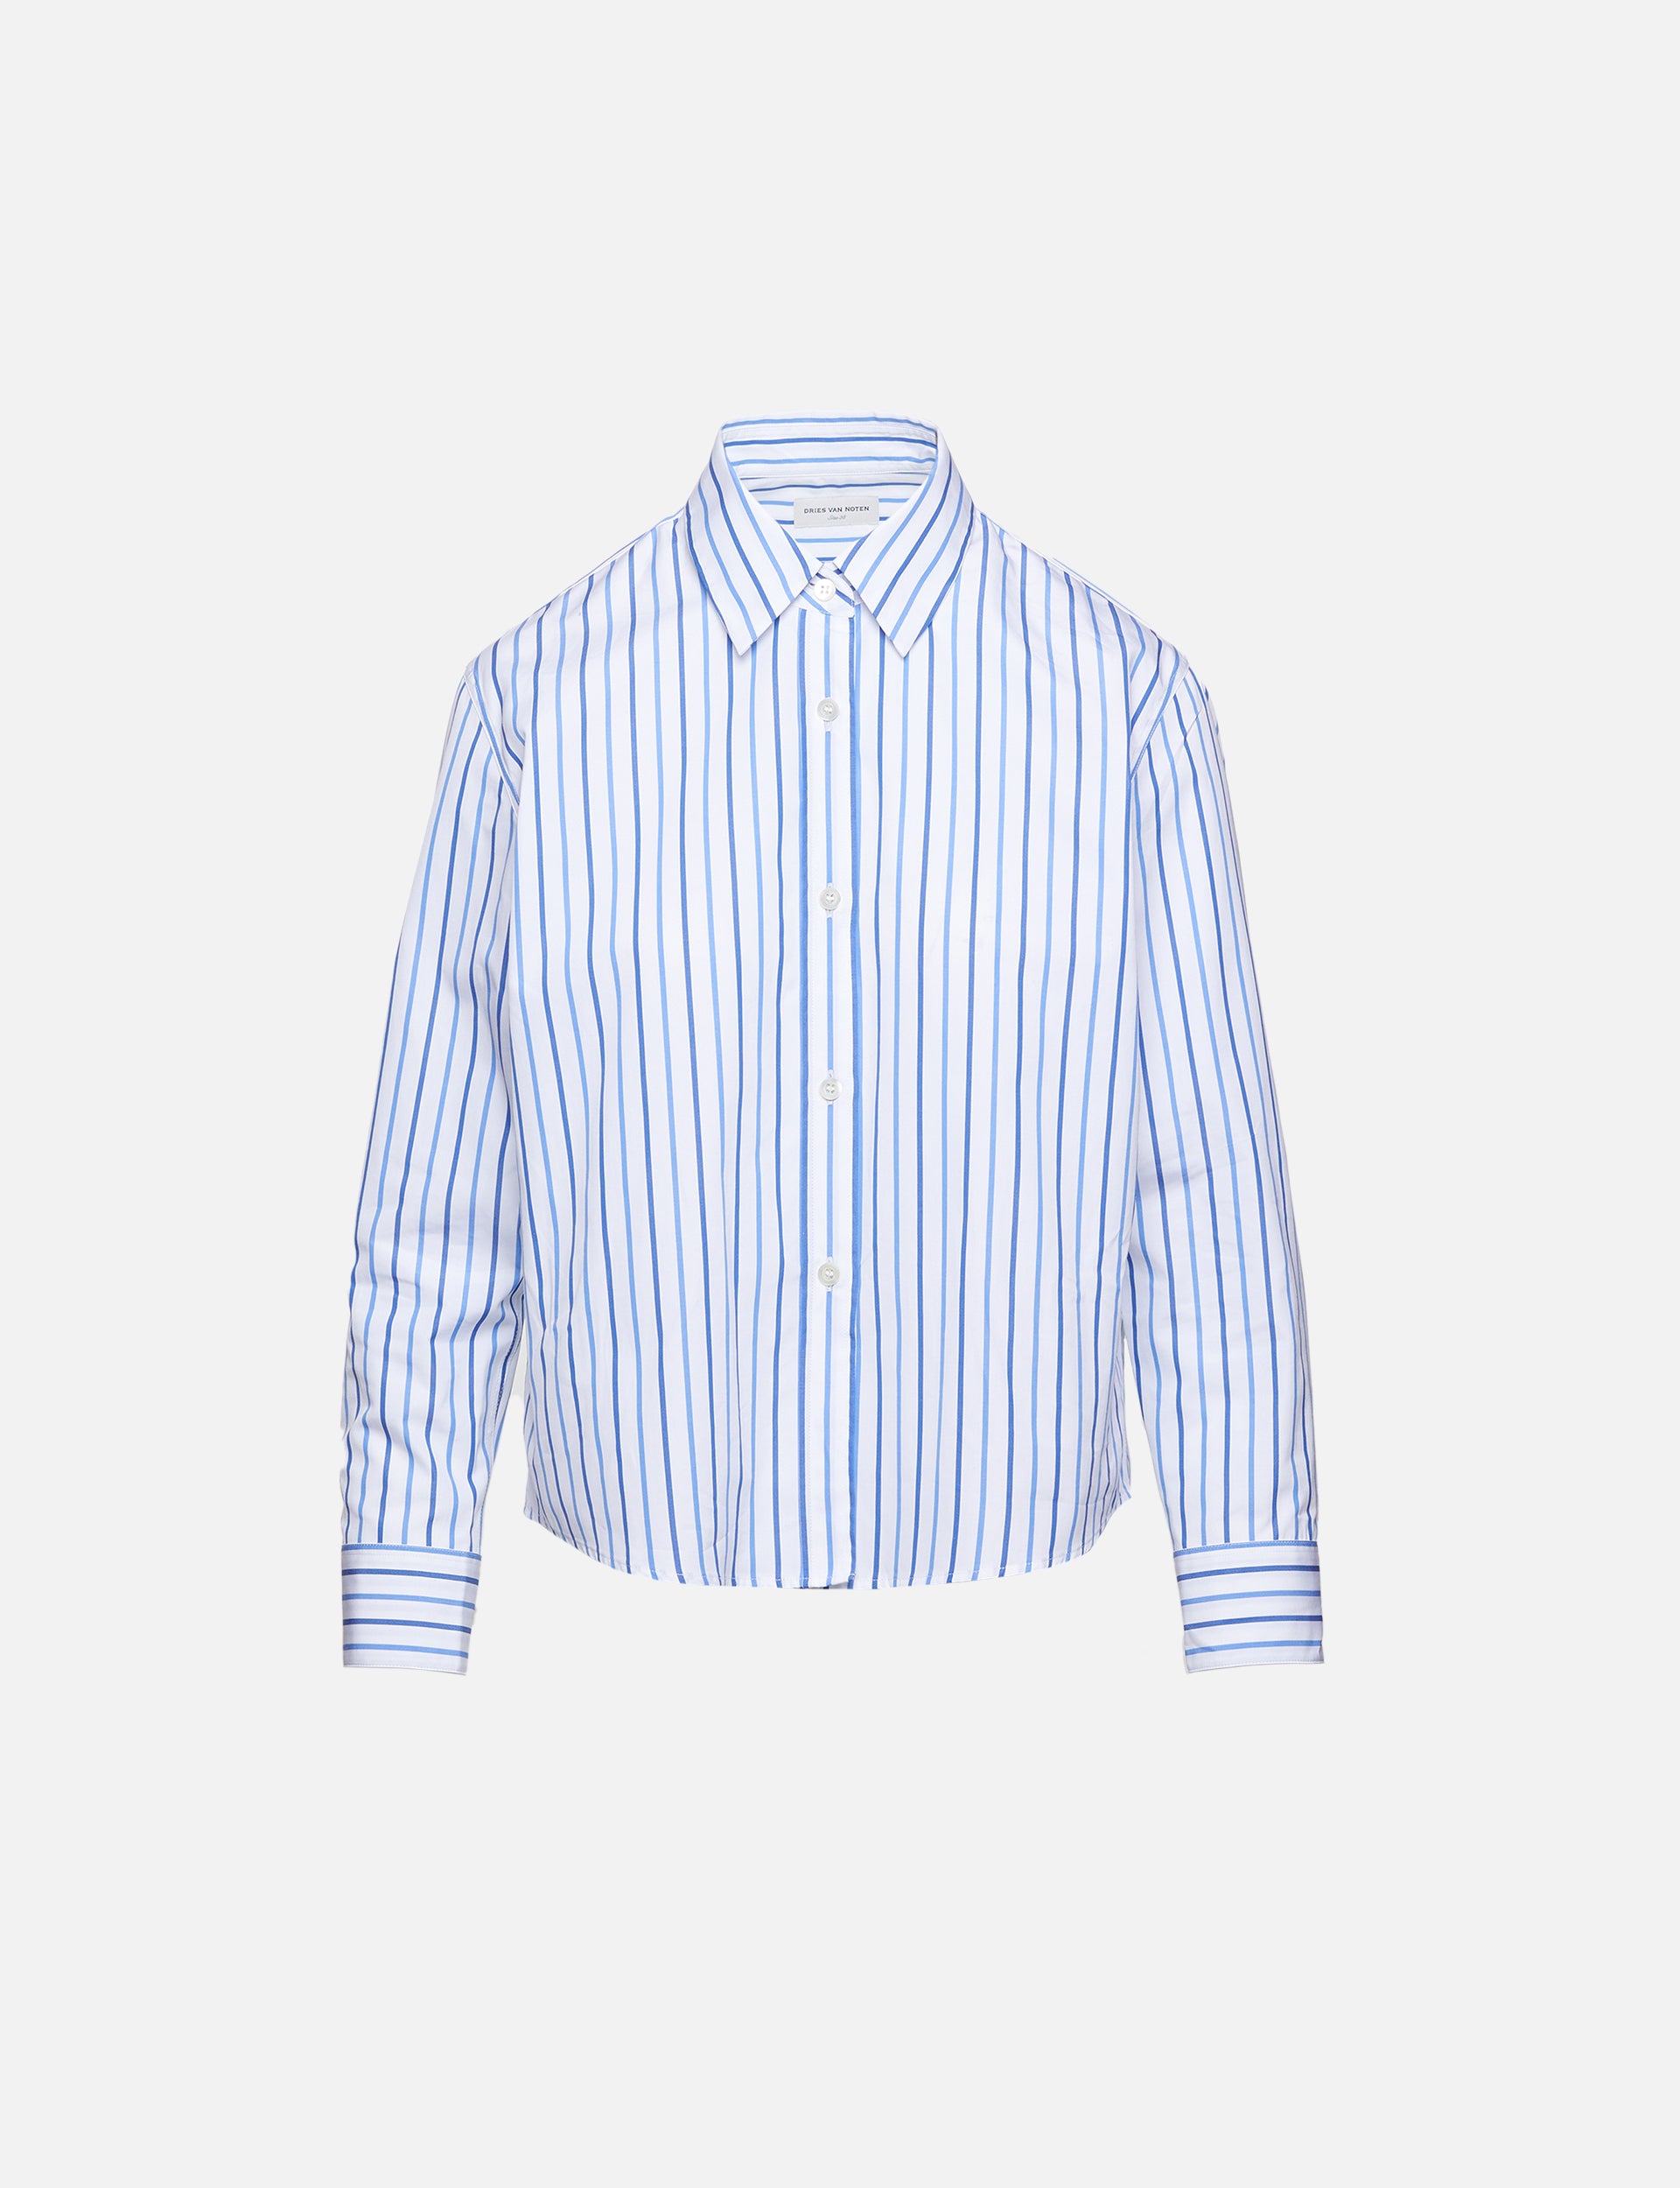 Clavini Stripe Shirt